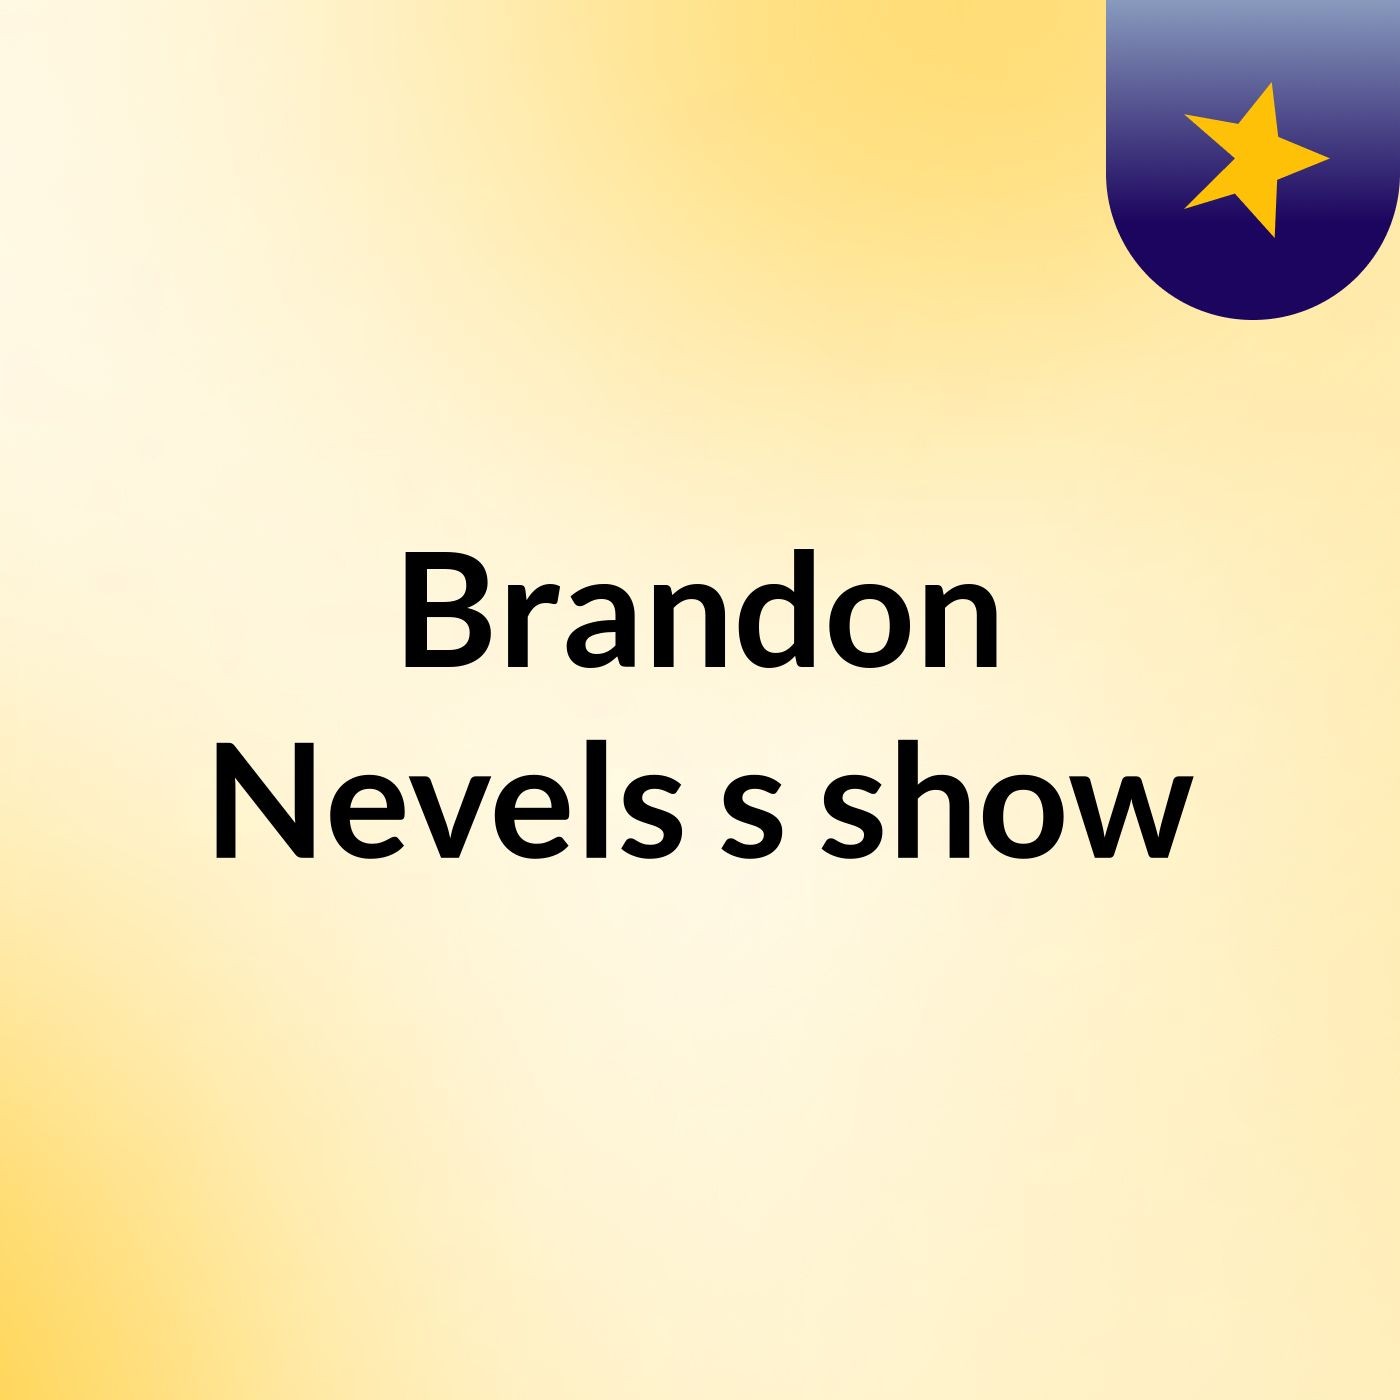 Brandon Nevels's show